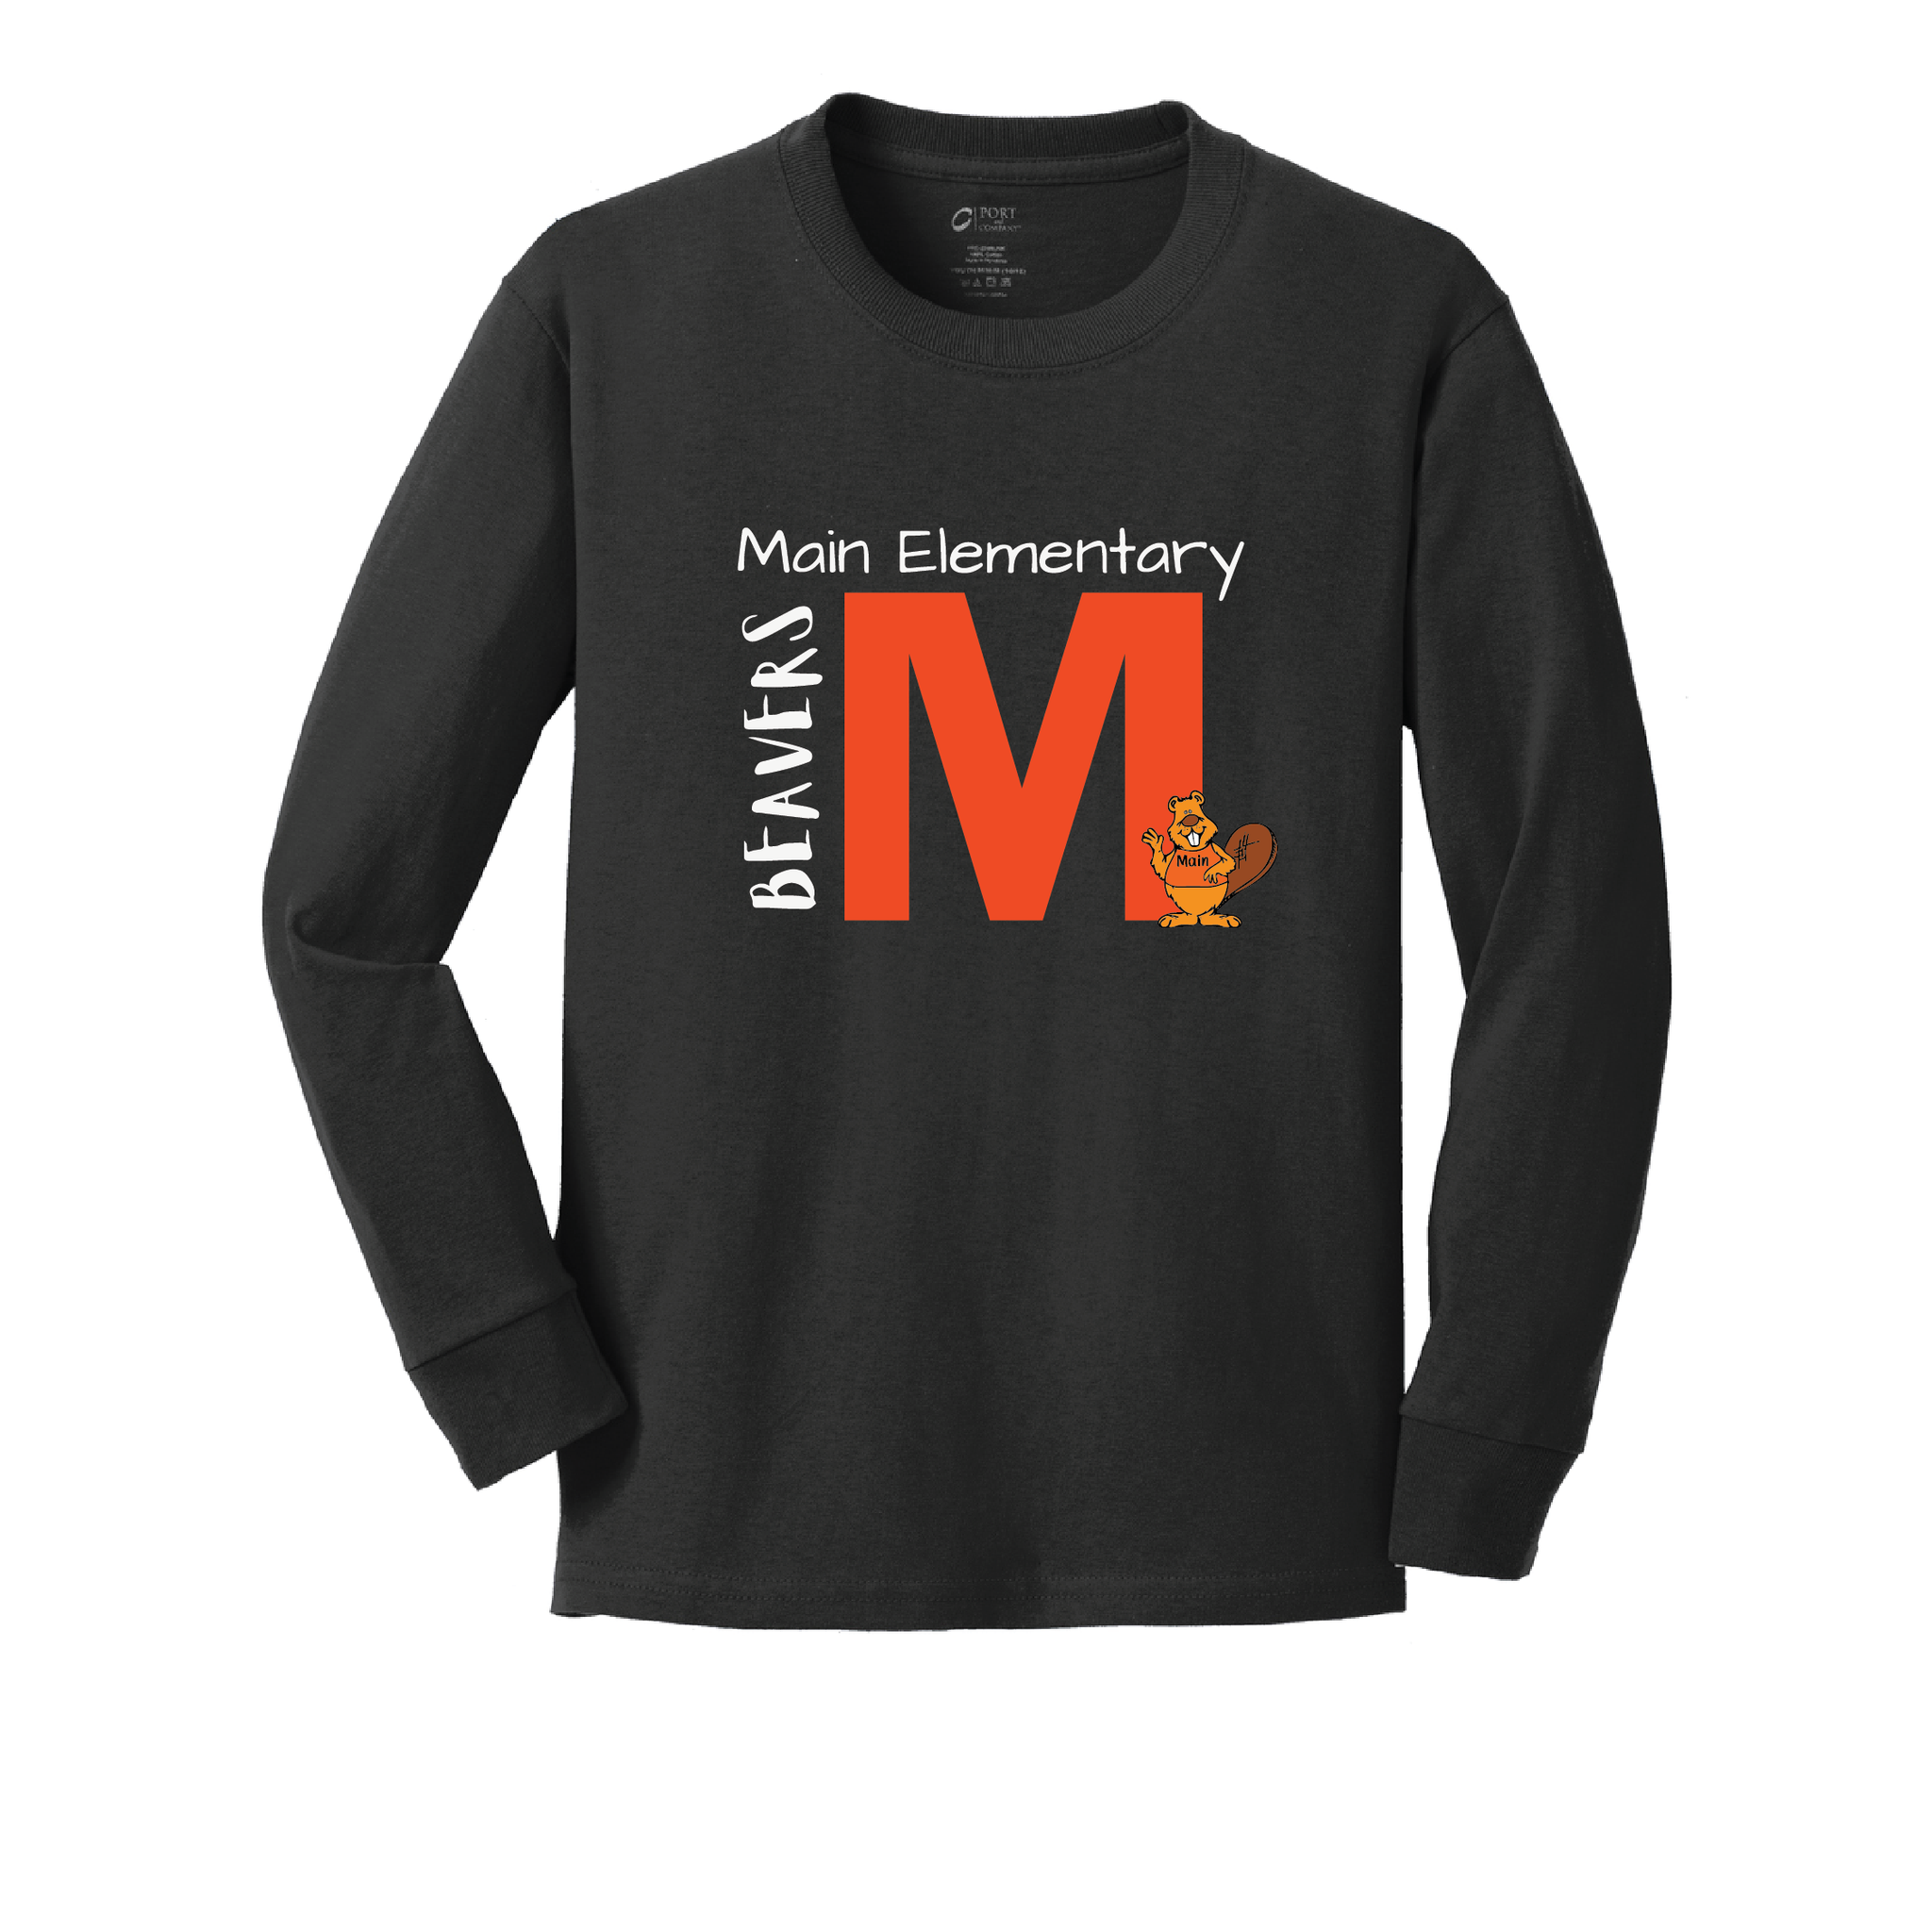 Main Elementary 'M' Long Sleeve T-Shirt